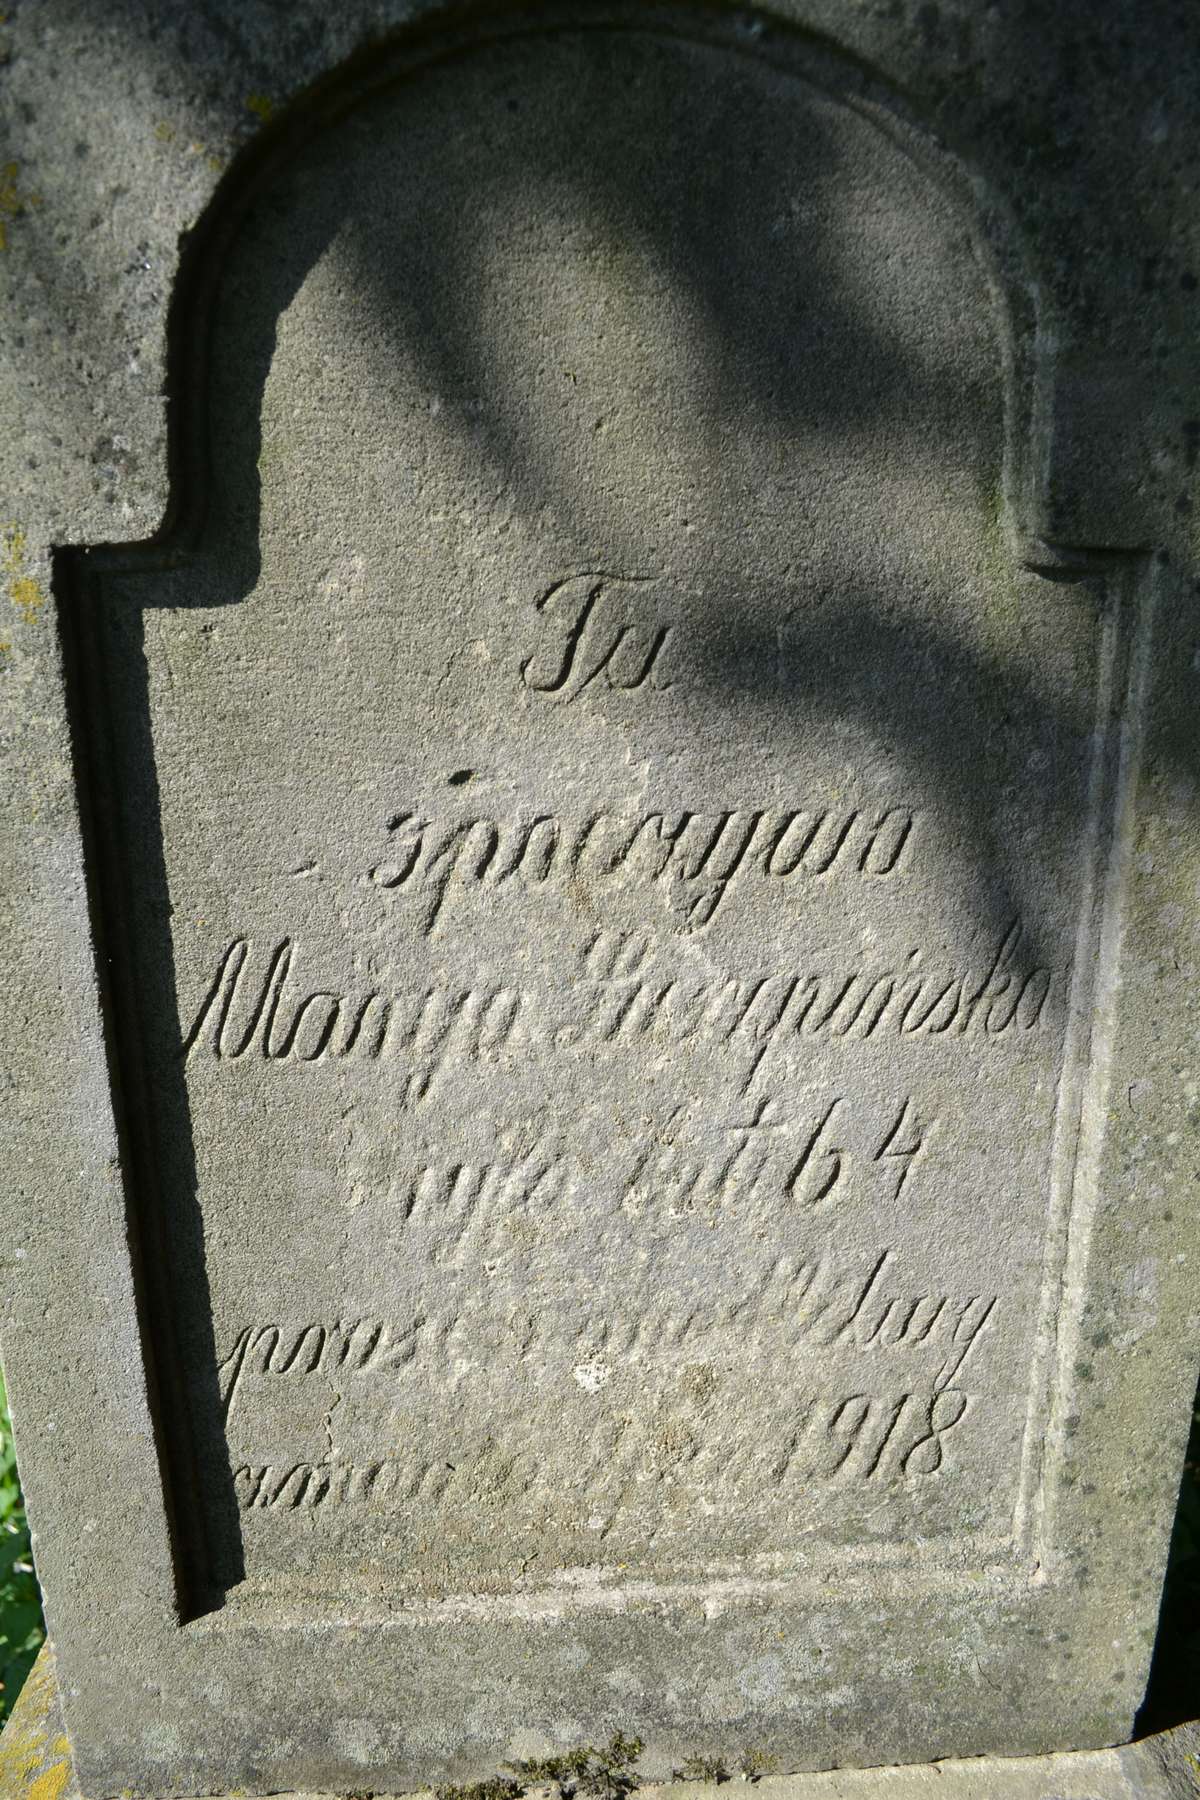 Inscription from the gravestone of Maria Luzpinska, Bucniv cemetery